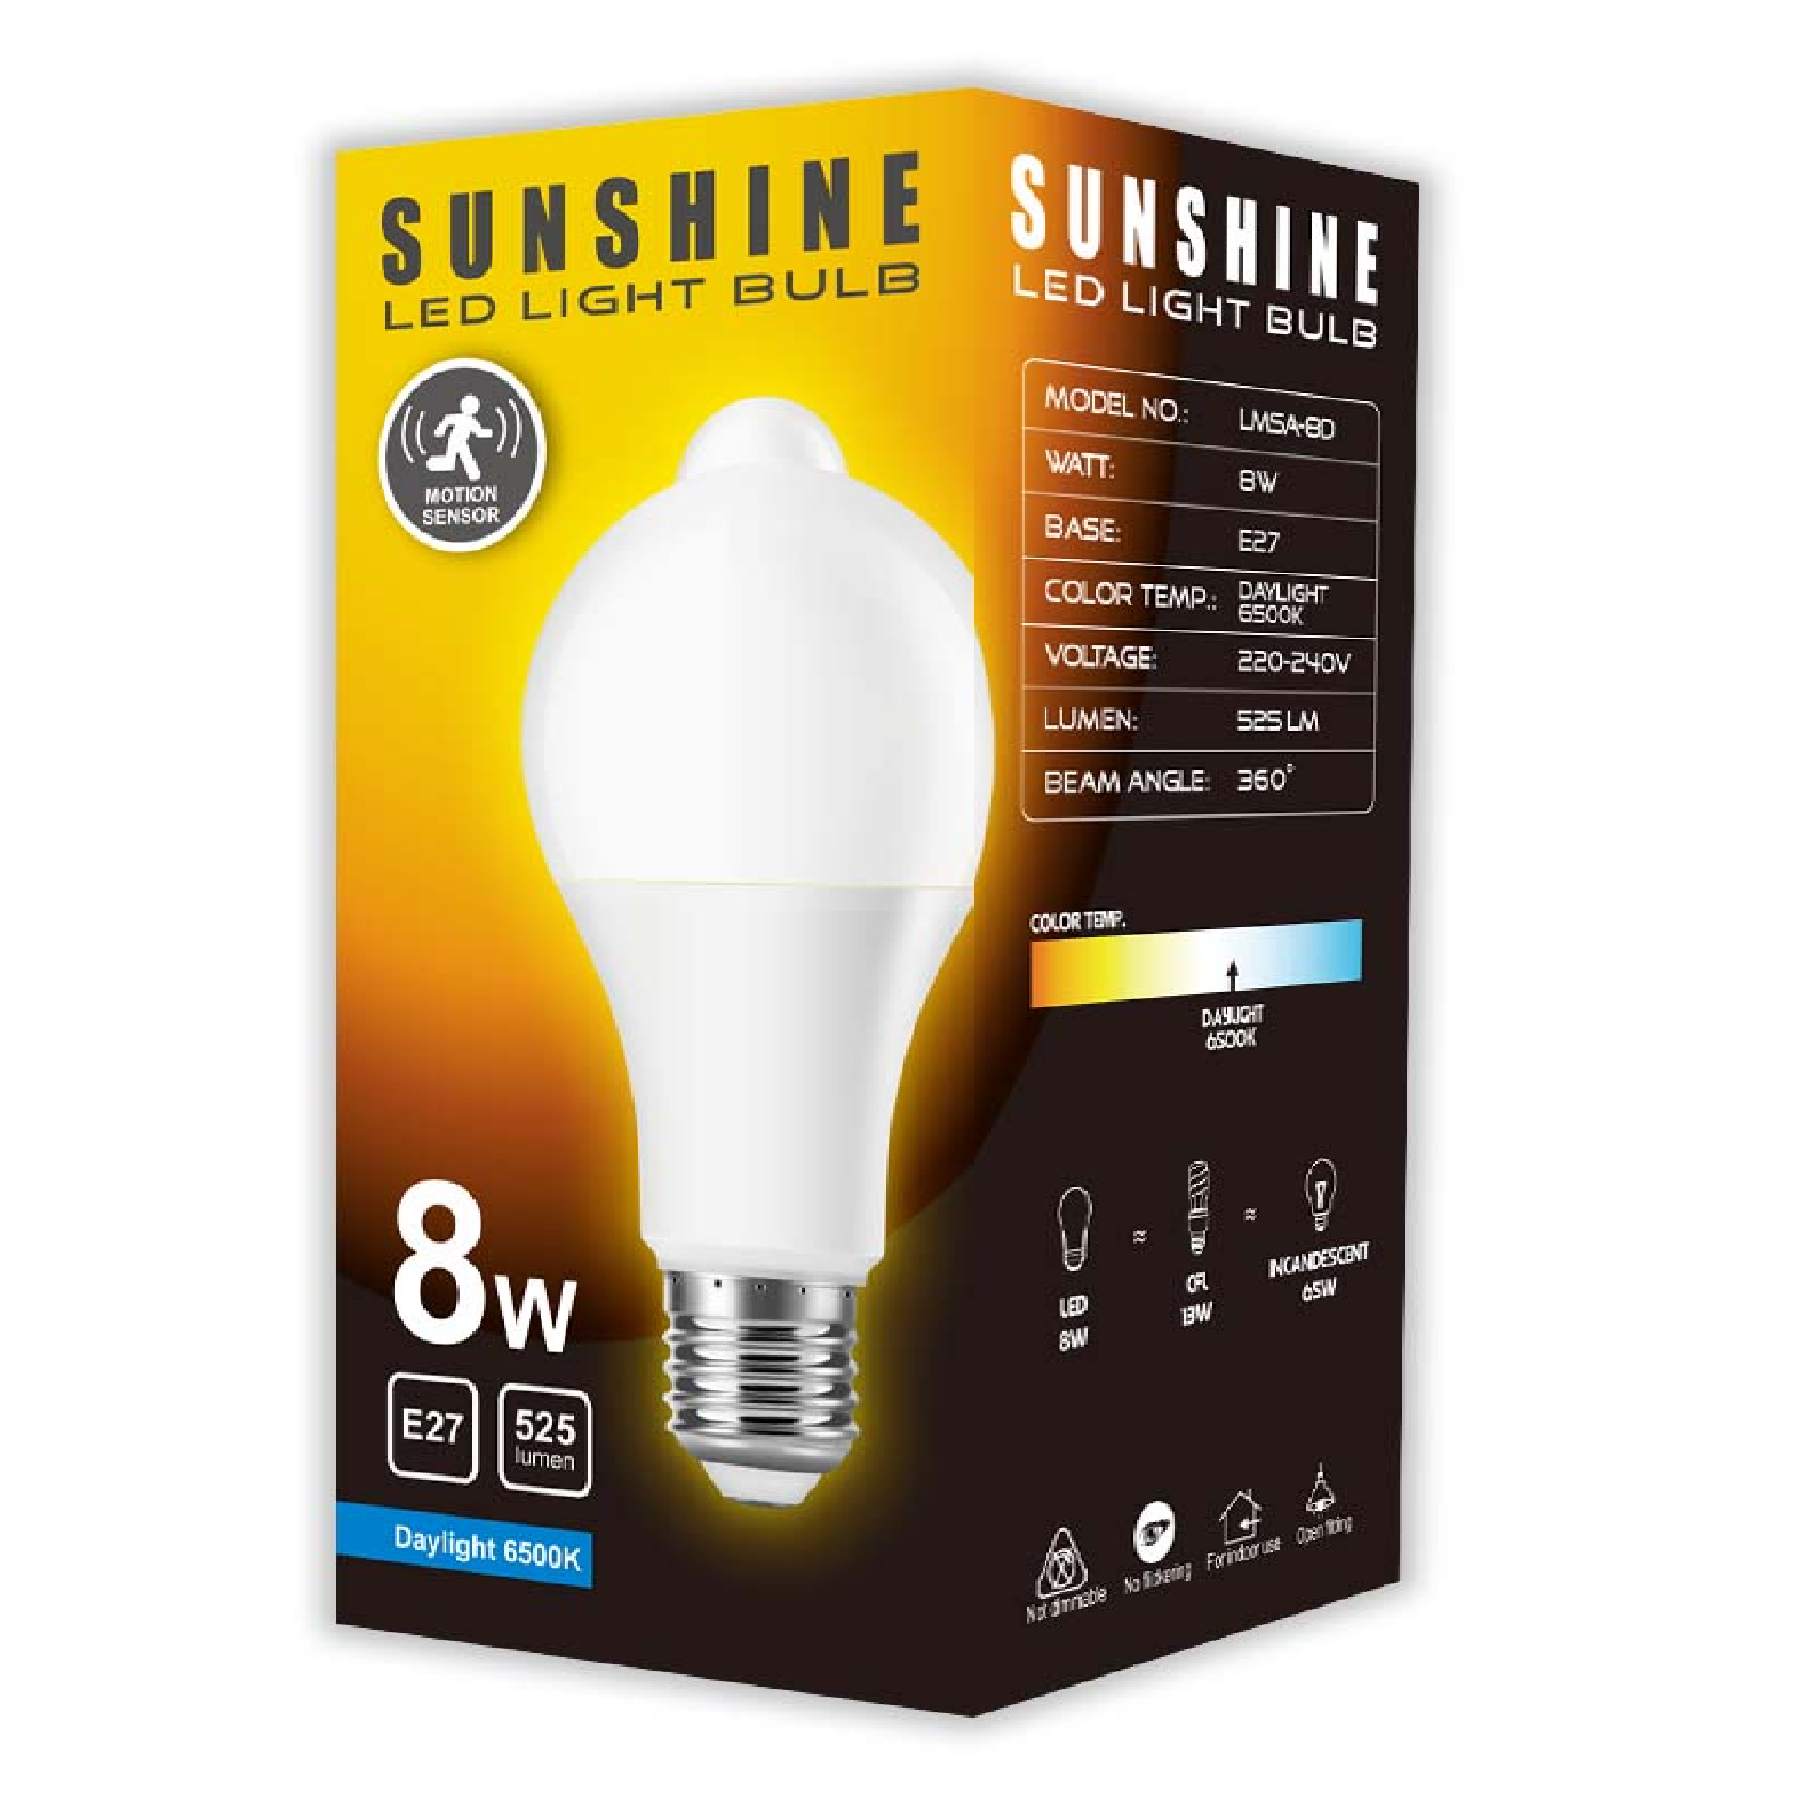 Sunshine LED Bulb MOTION SENSOR 8W E27 Daylight 6500K